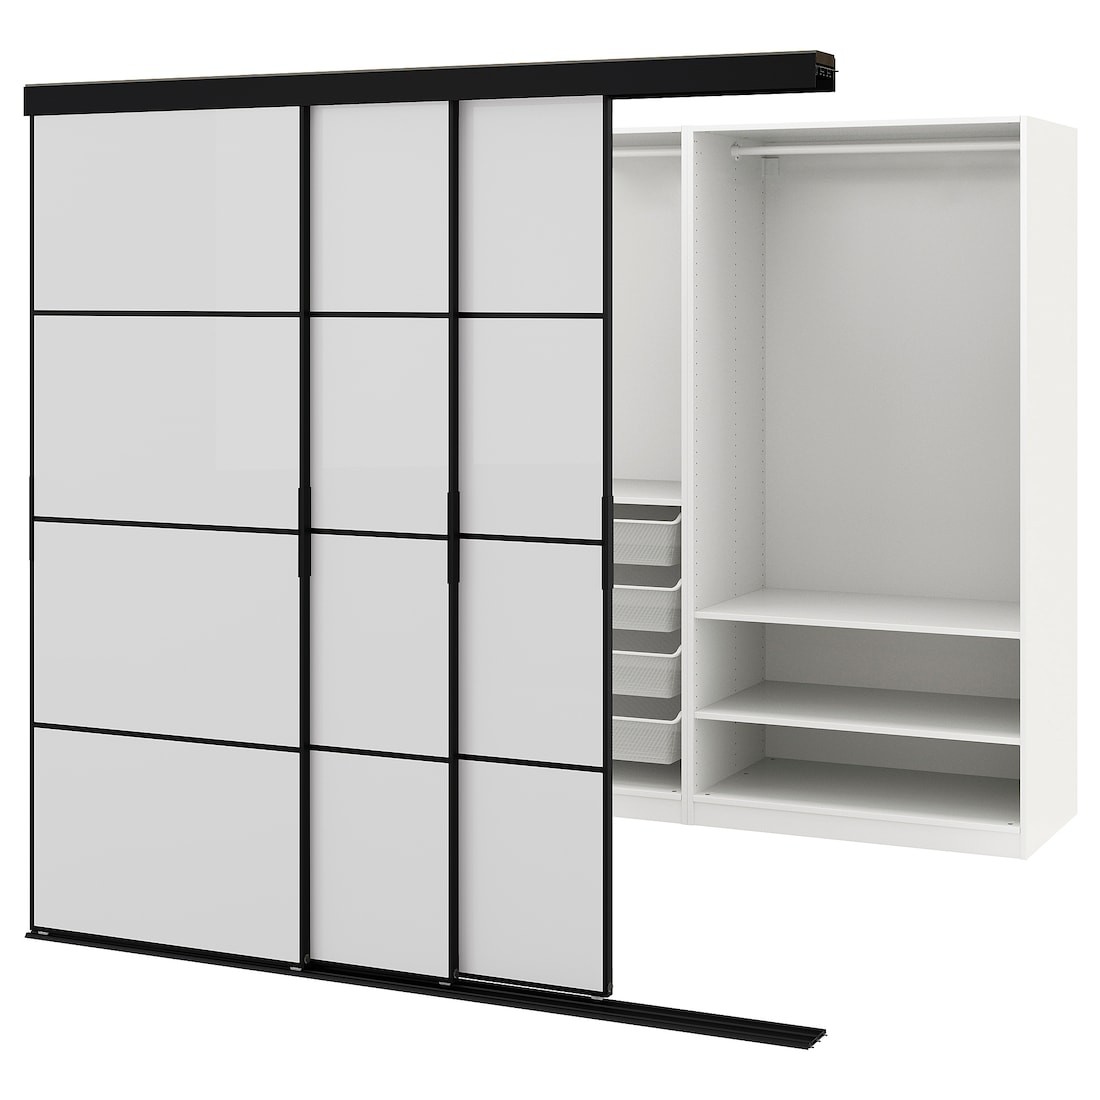 IKEA SKYTTA / PAX Гардероб с раздвижными дверями, черный/Хокксунд глянцевый светло-серый,226х160х205 см 4310 , - 29528138 295.281.38